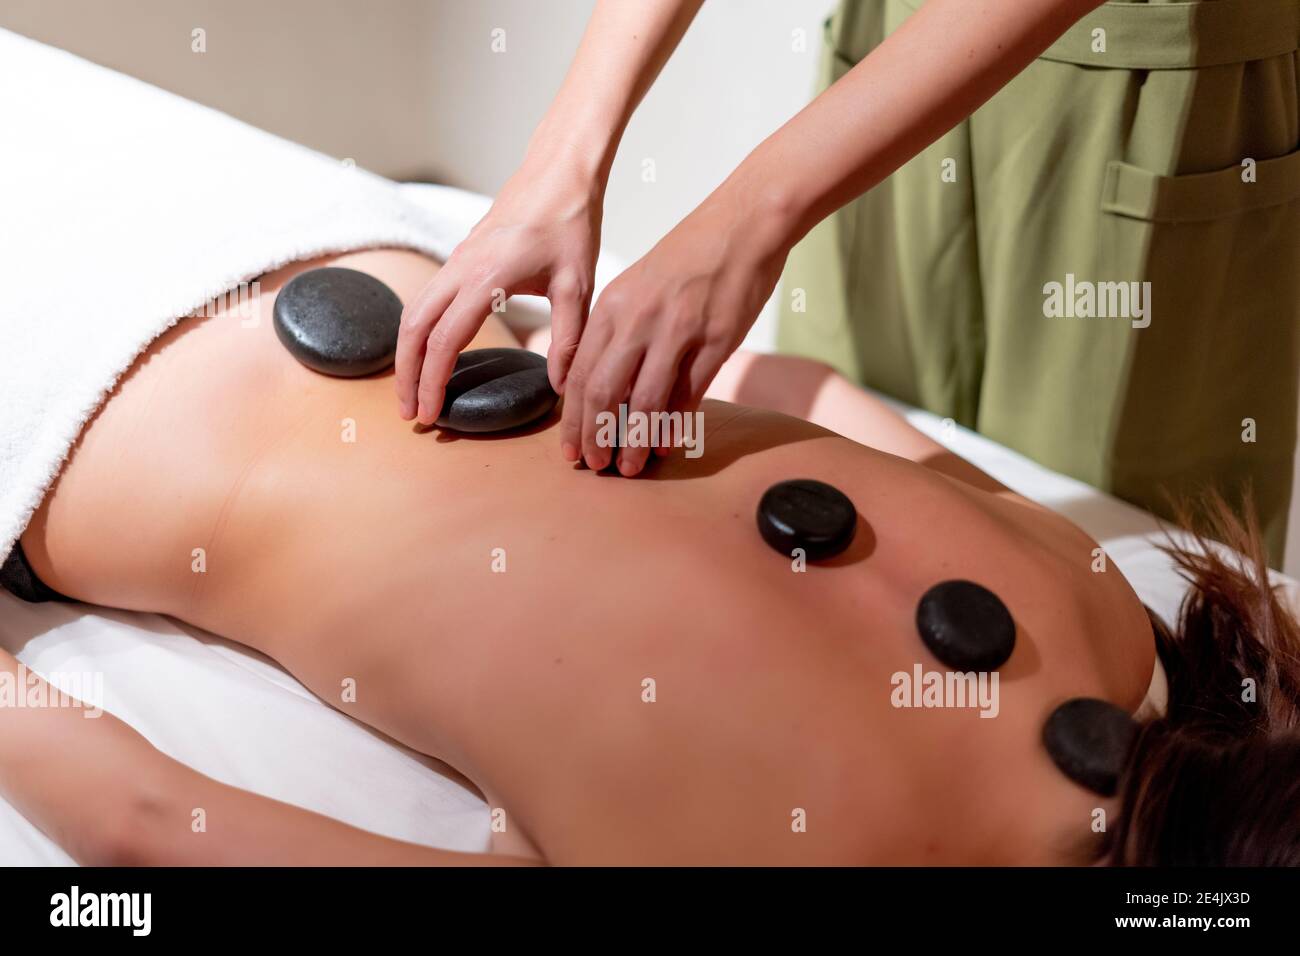 Mature massage therapist positioning stones on female customer's back at health spa Stock Photo